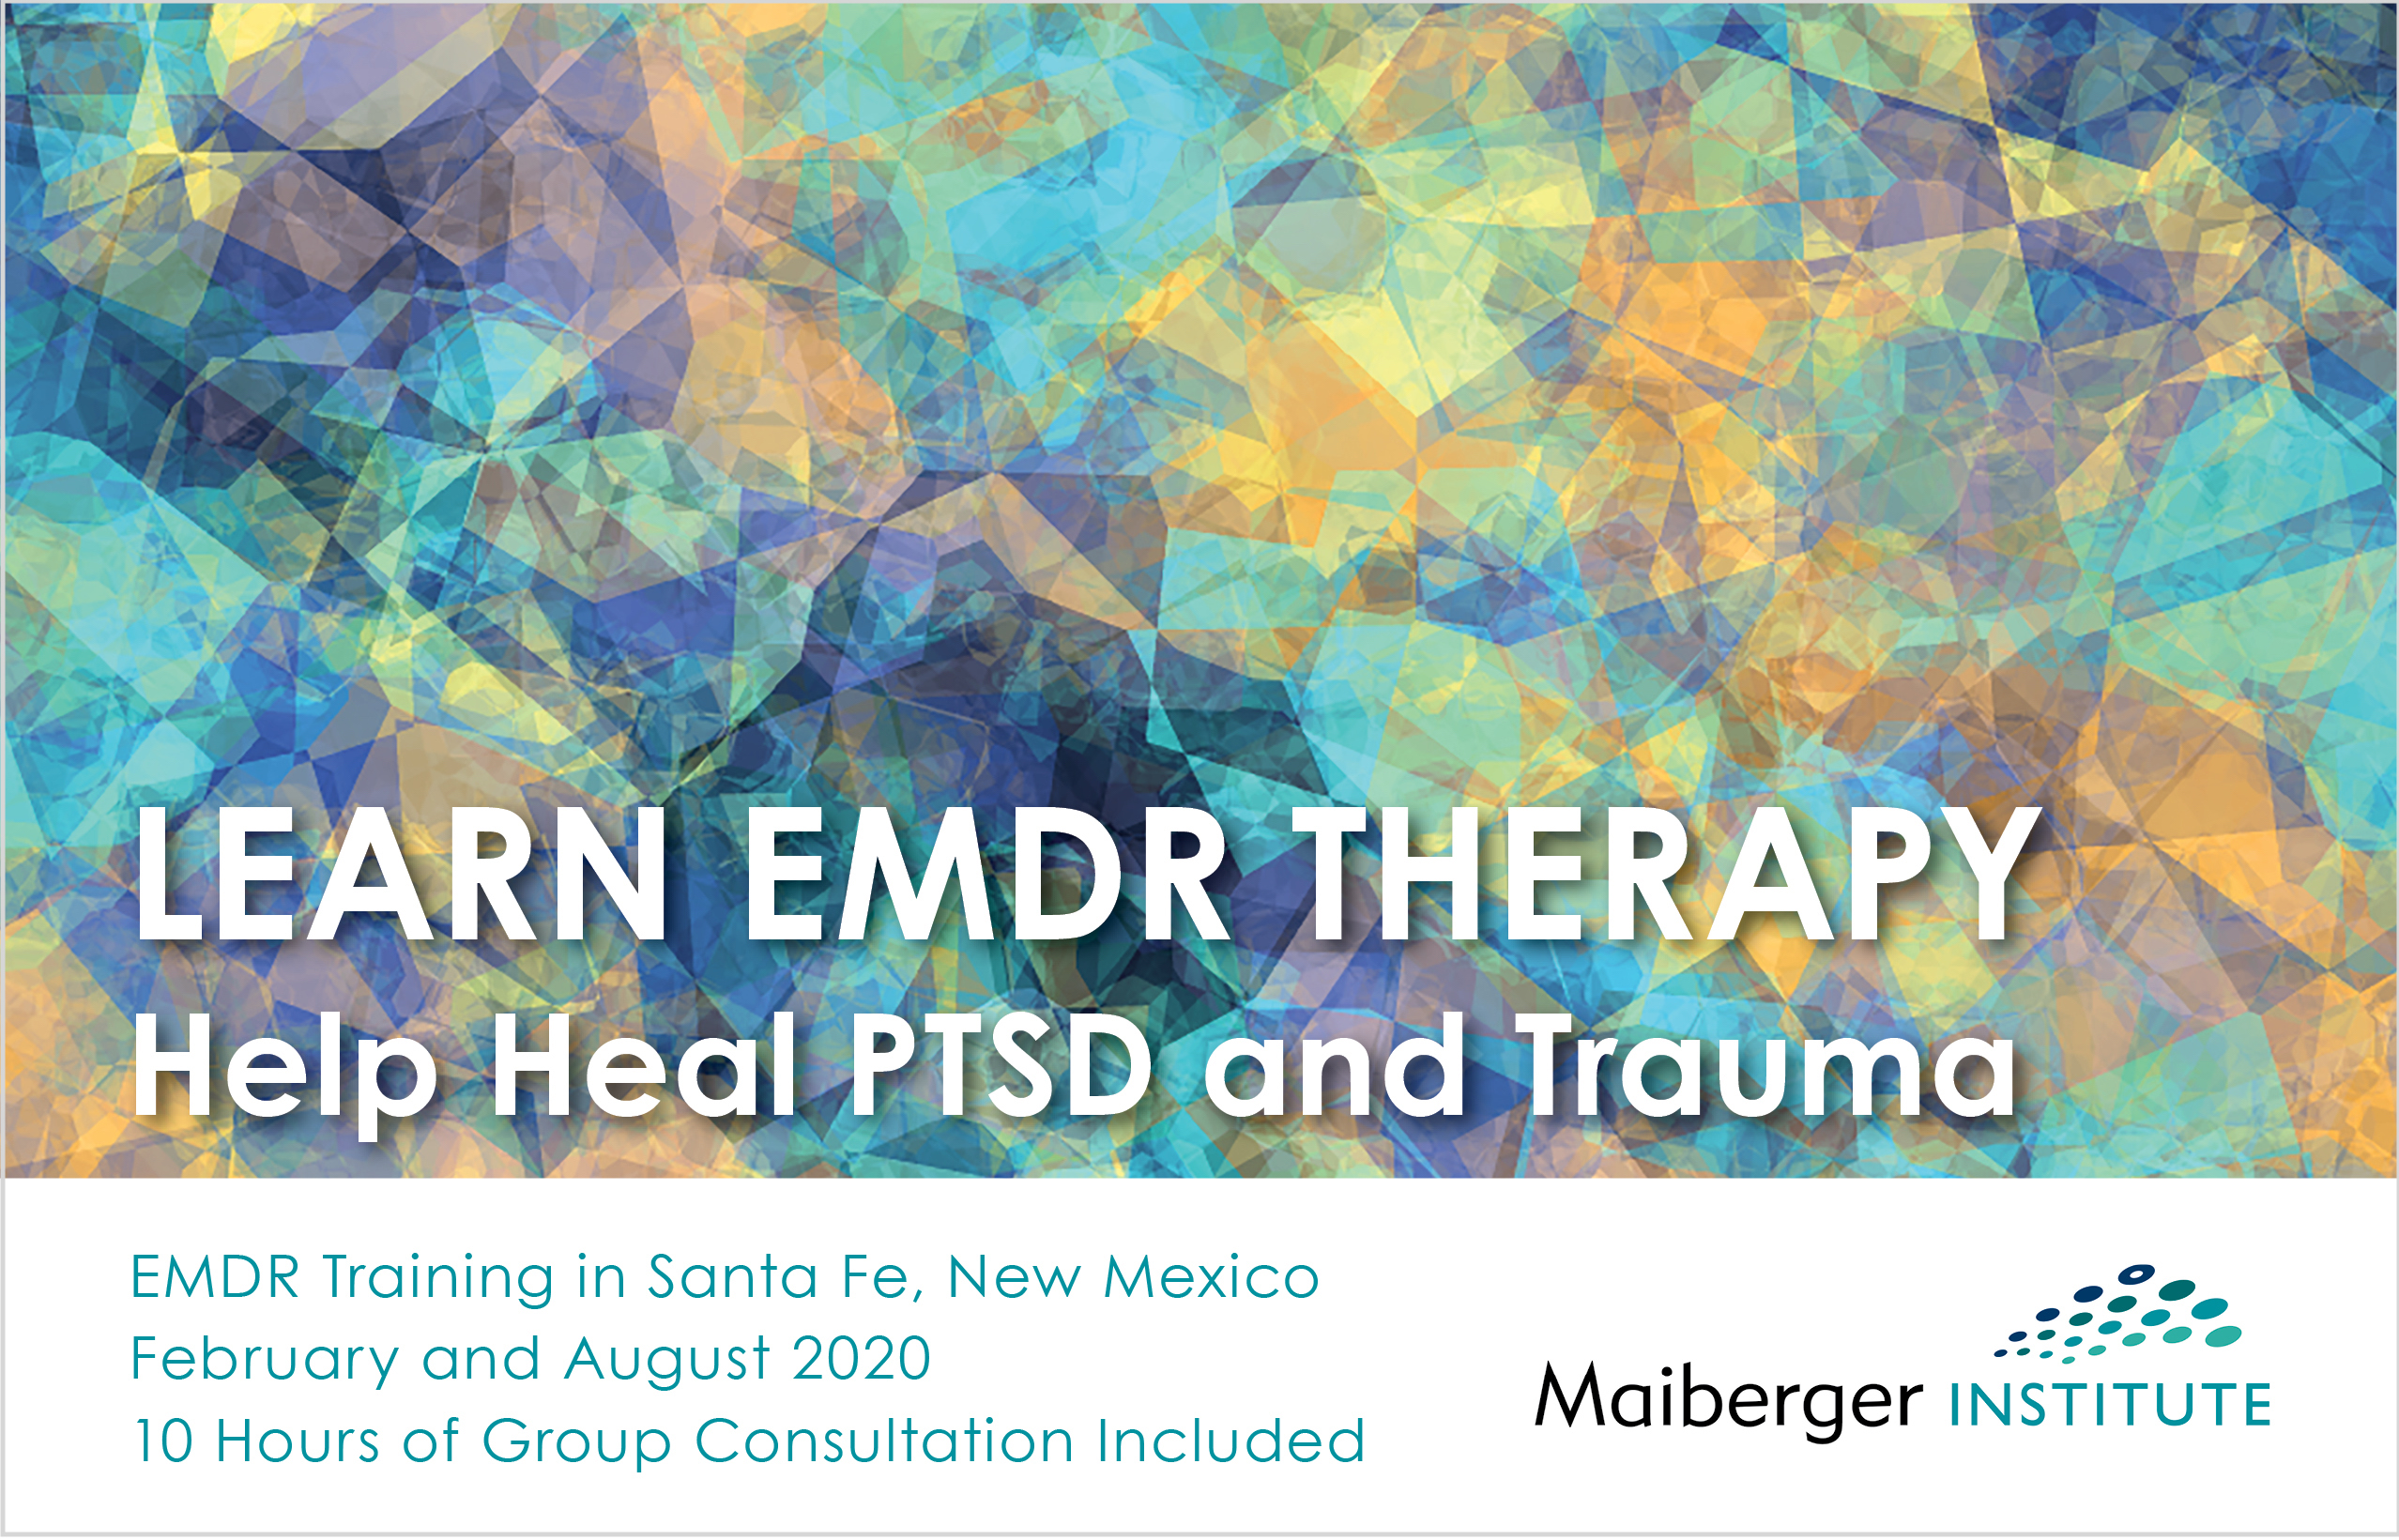 EMDR Training in Santa Fe New Mexico - February and August 2020 - EMDR Events Calendar - Maiberger Institute